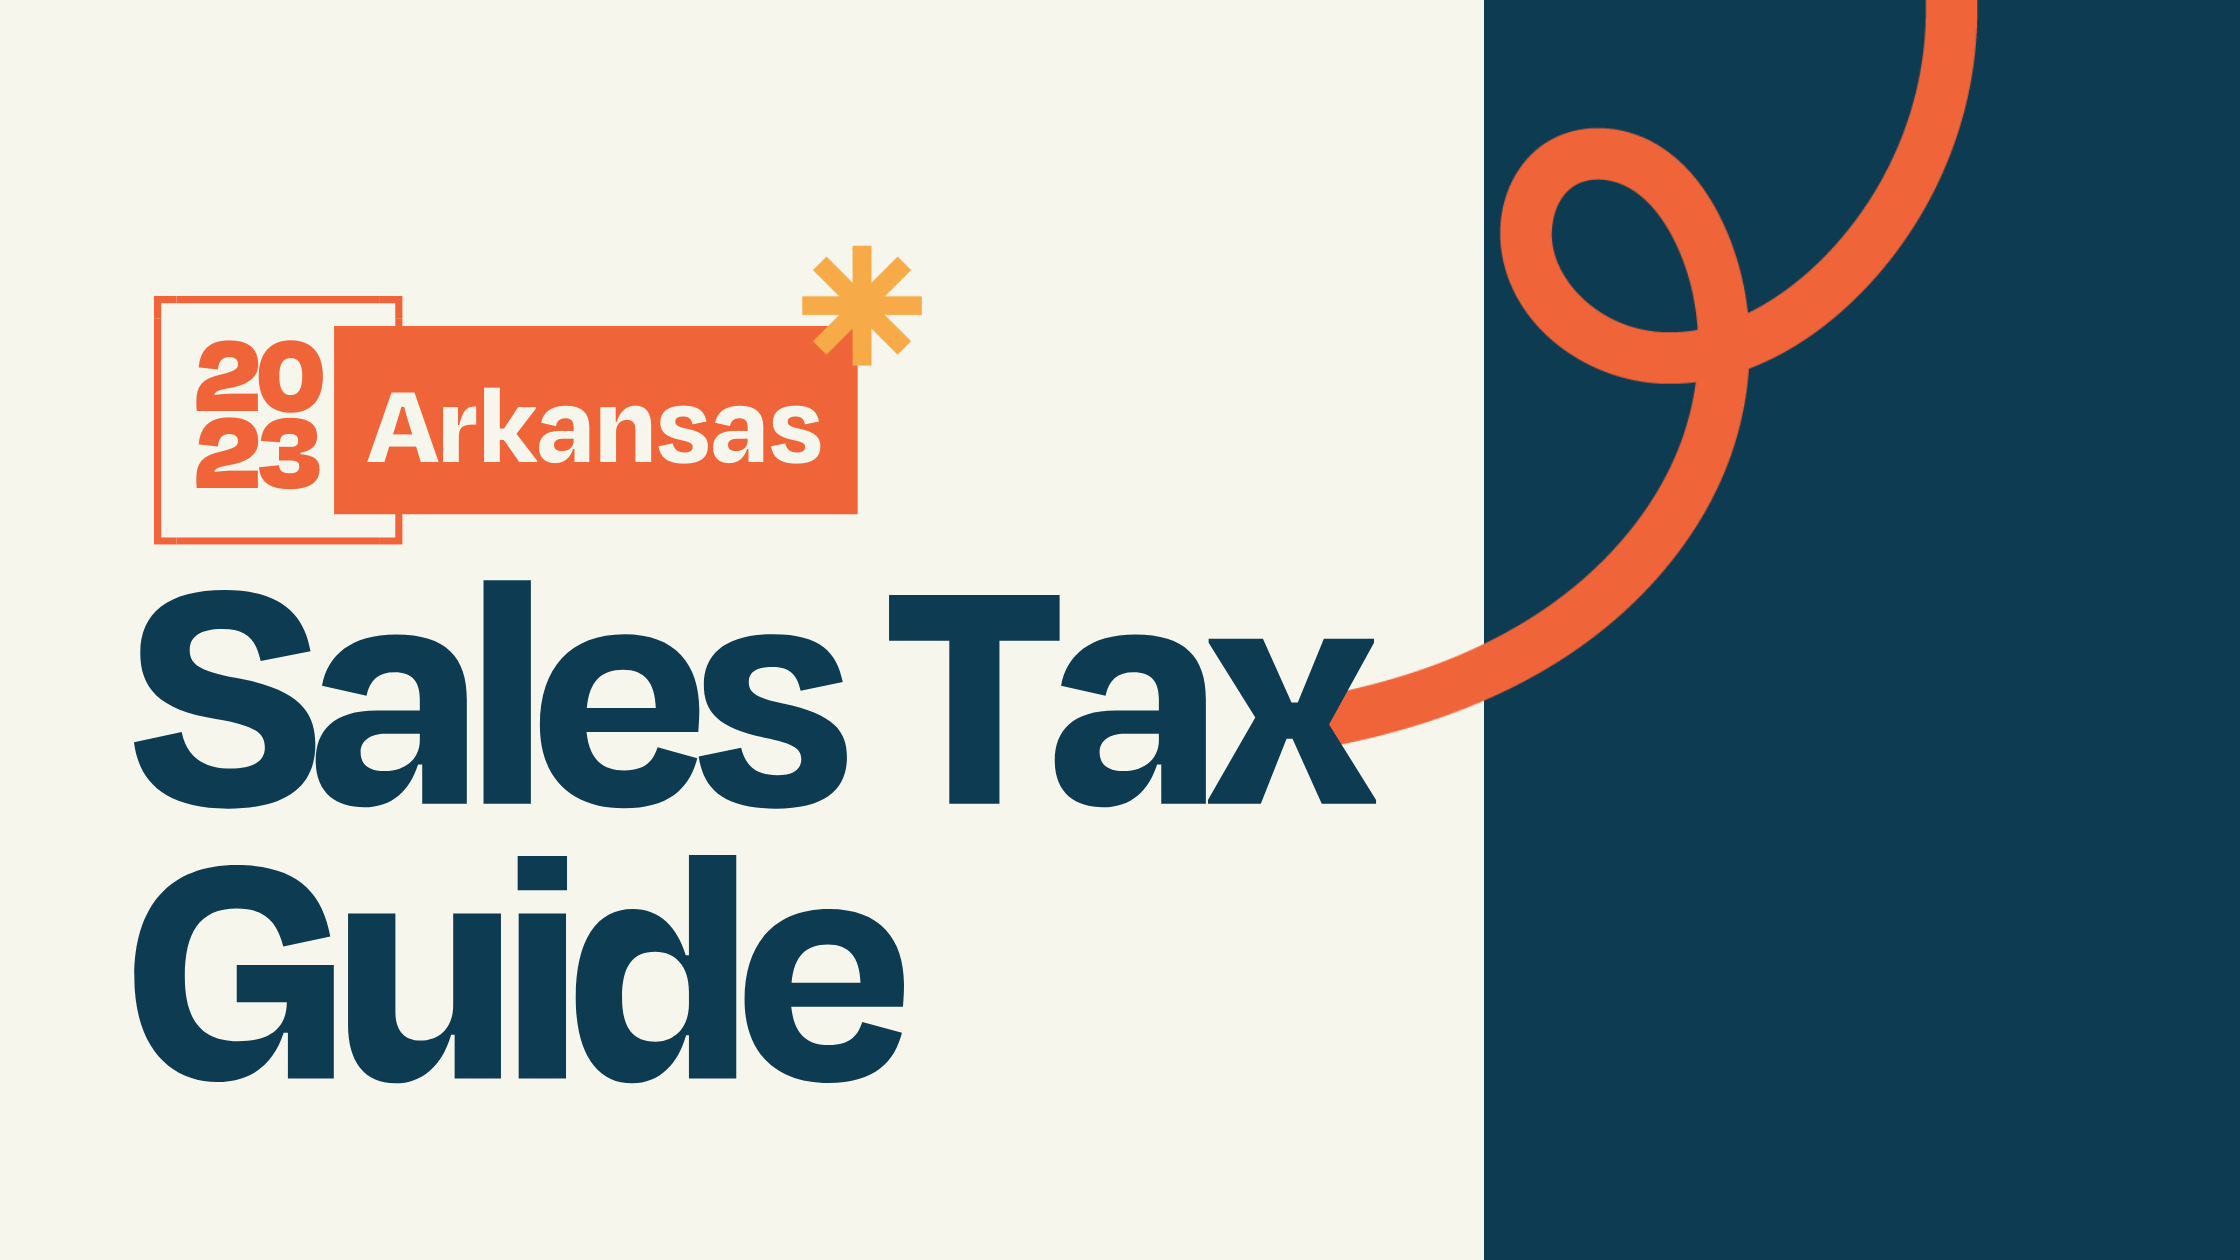 Arkansas 2023 Sales Tax Guide